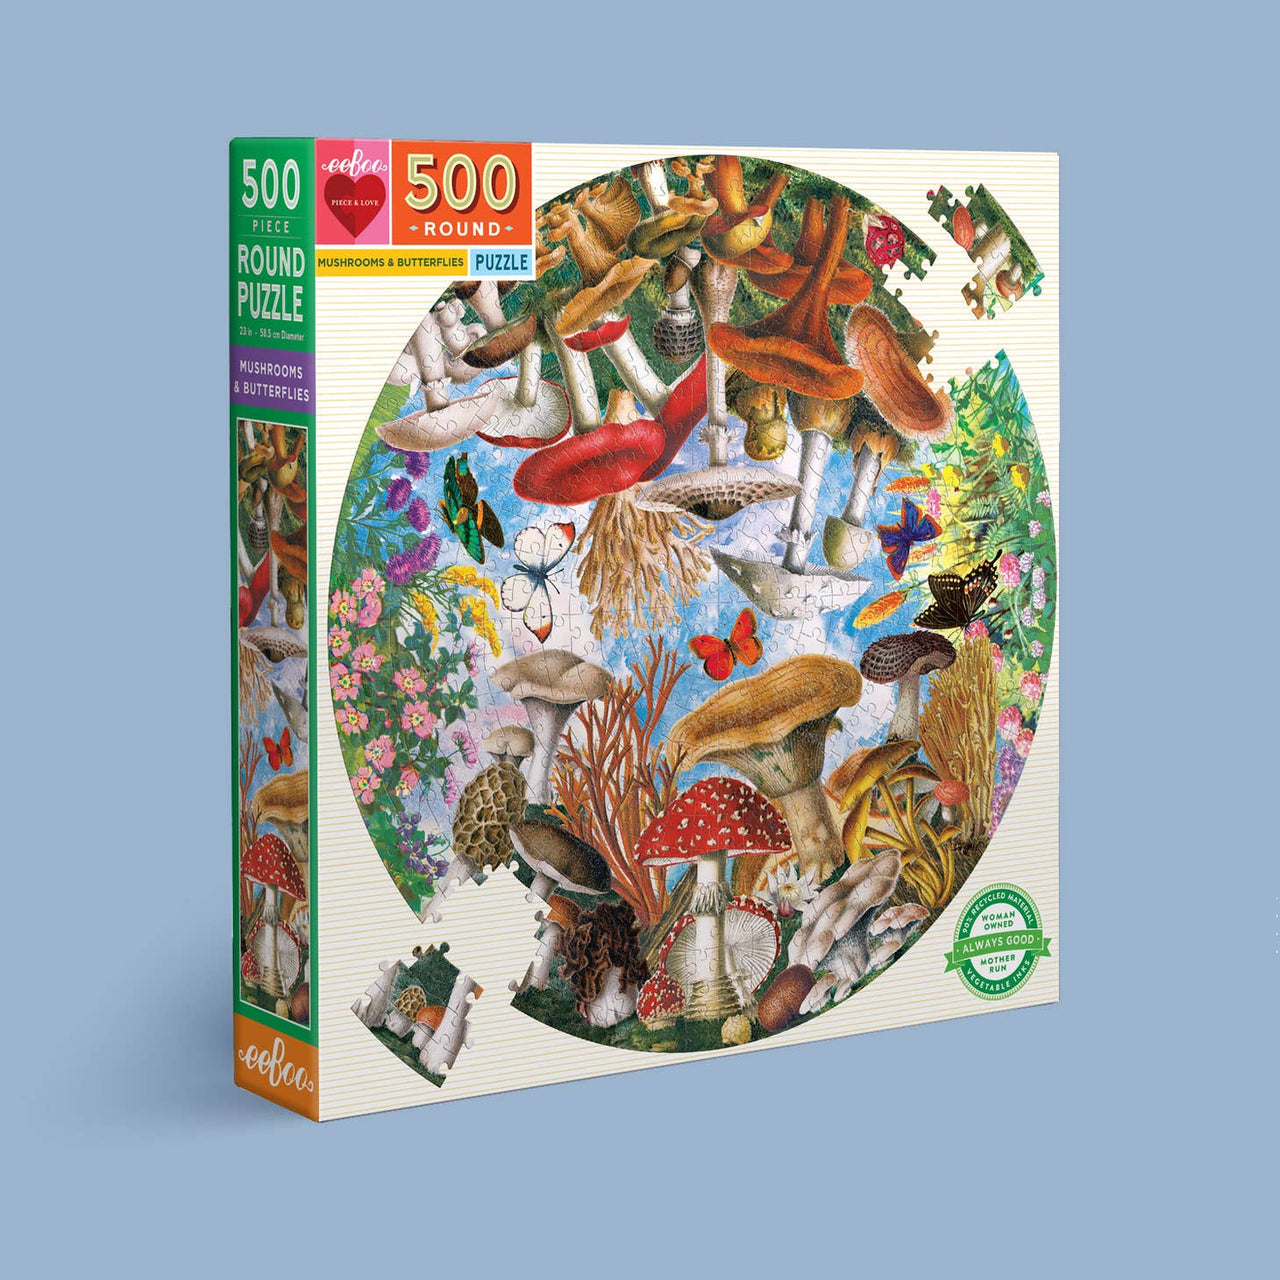 Eeboo - Mushrooms & Butterflies 500-Piece Round Puzzle